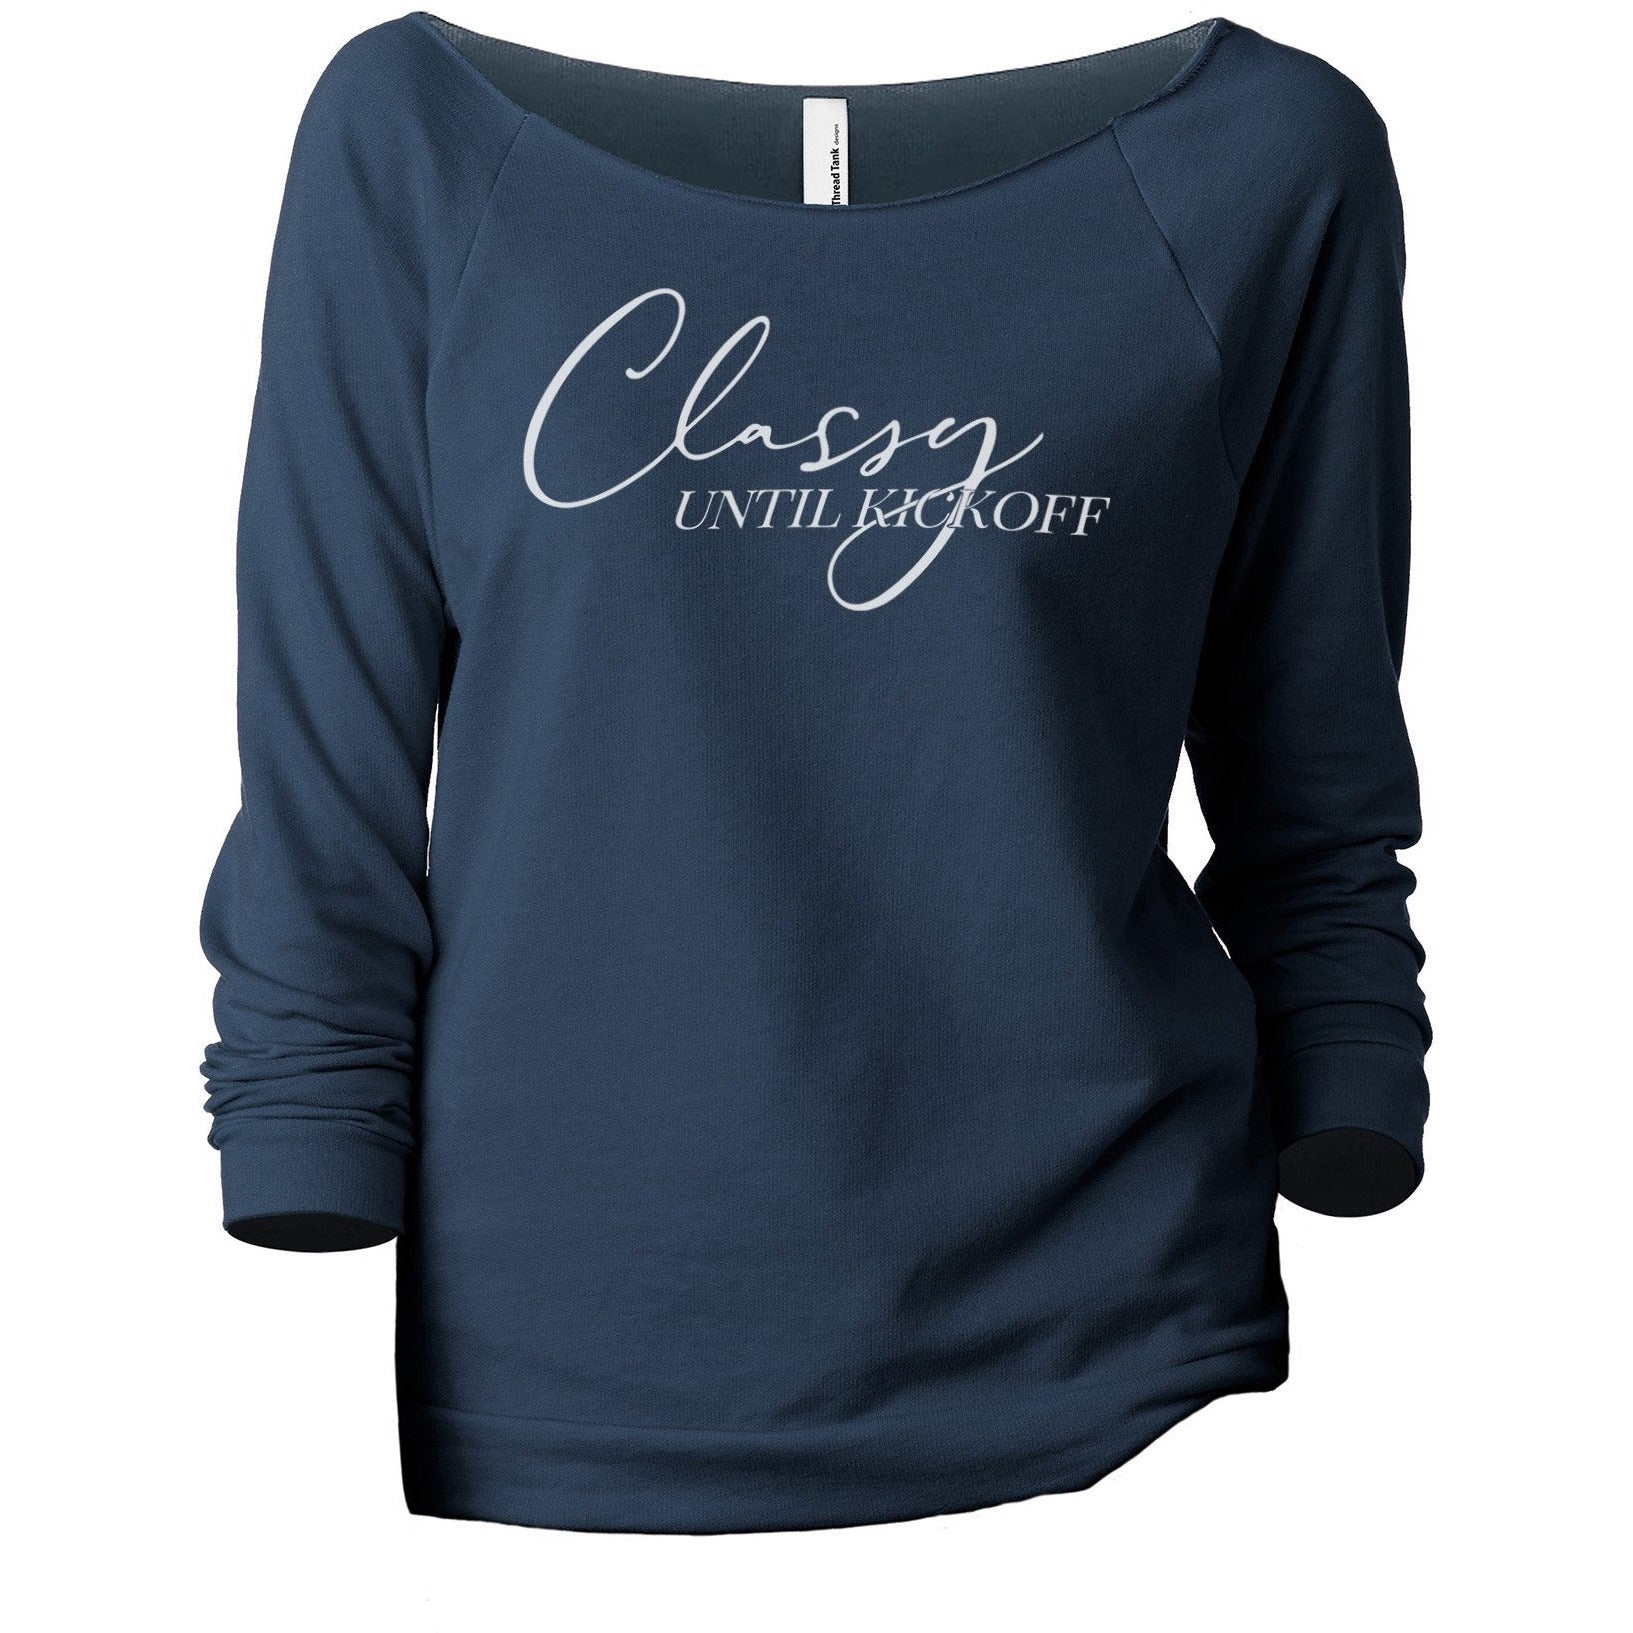 Classy Until Kickoff Women's Graphic Printed Lightweight Slouchy 3/4 Sleeves Sweatshirt Navy